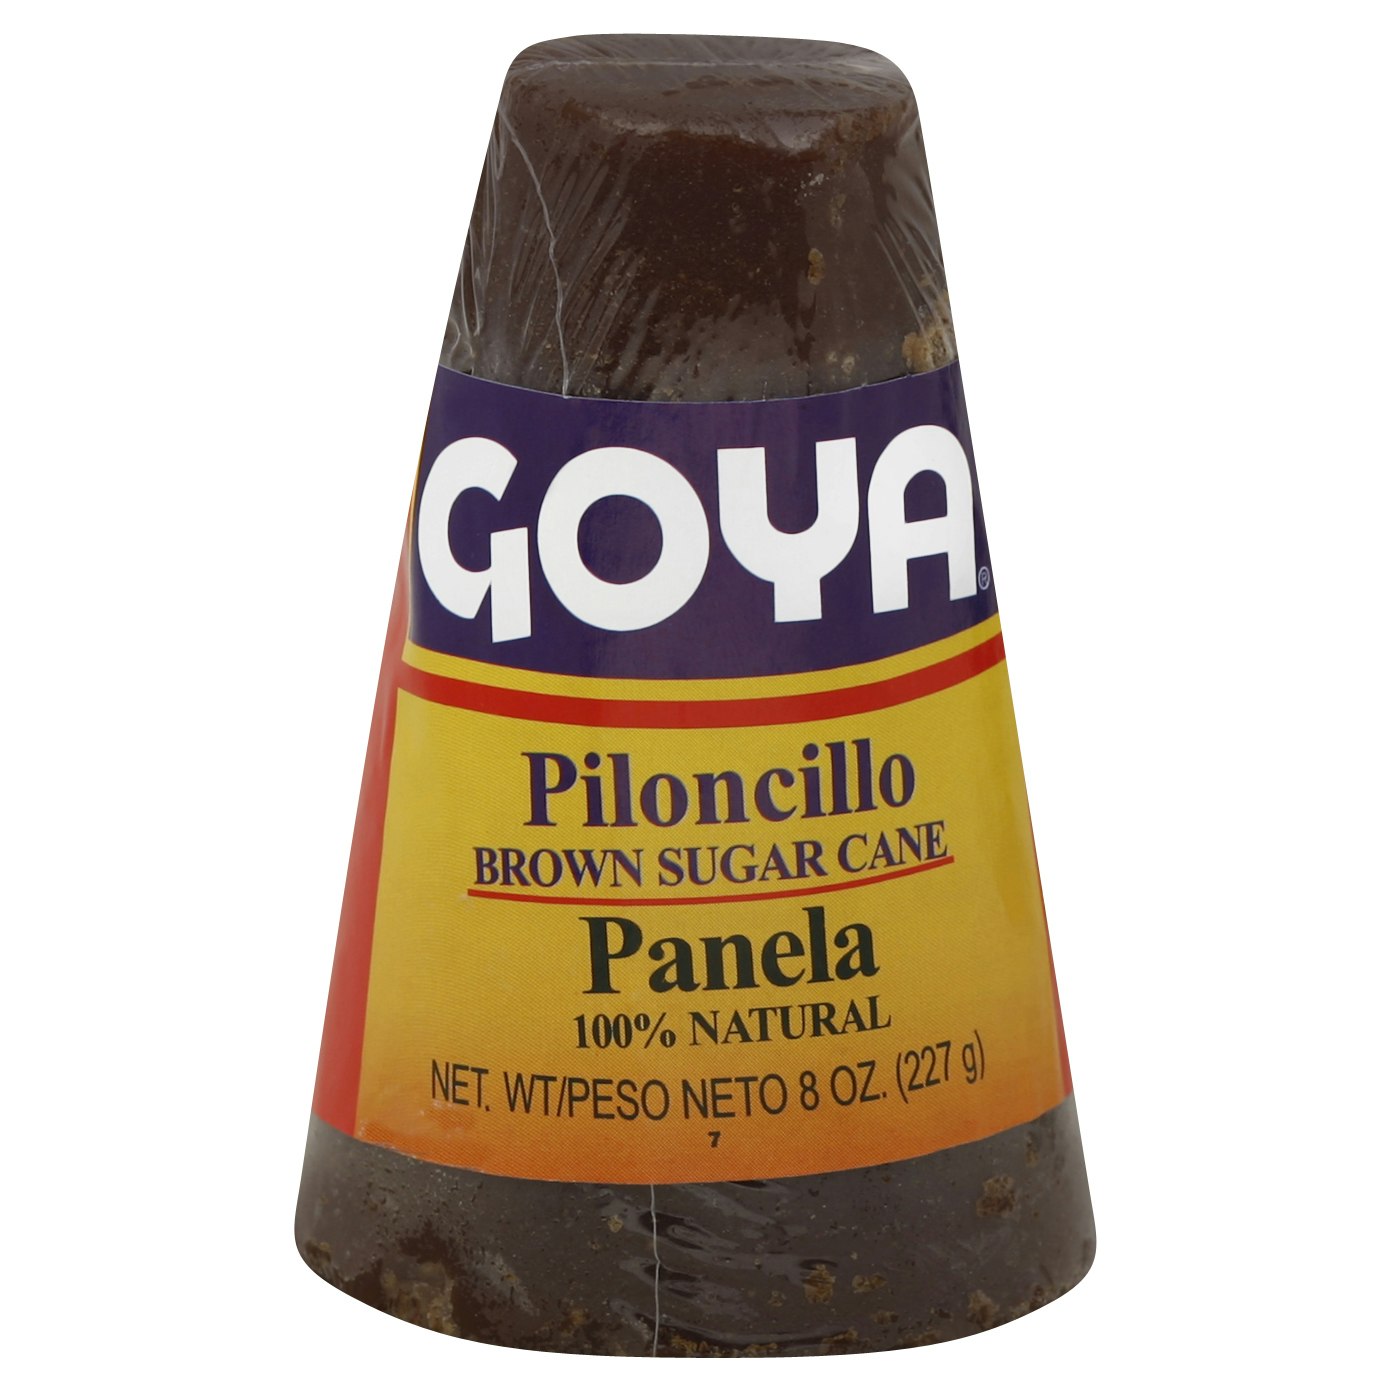 Goya Panella Sugar Cane Brown 8 Oz Pack of 25